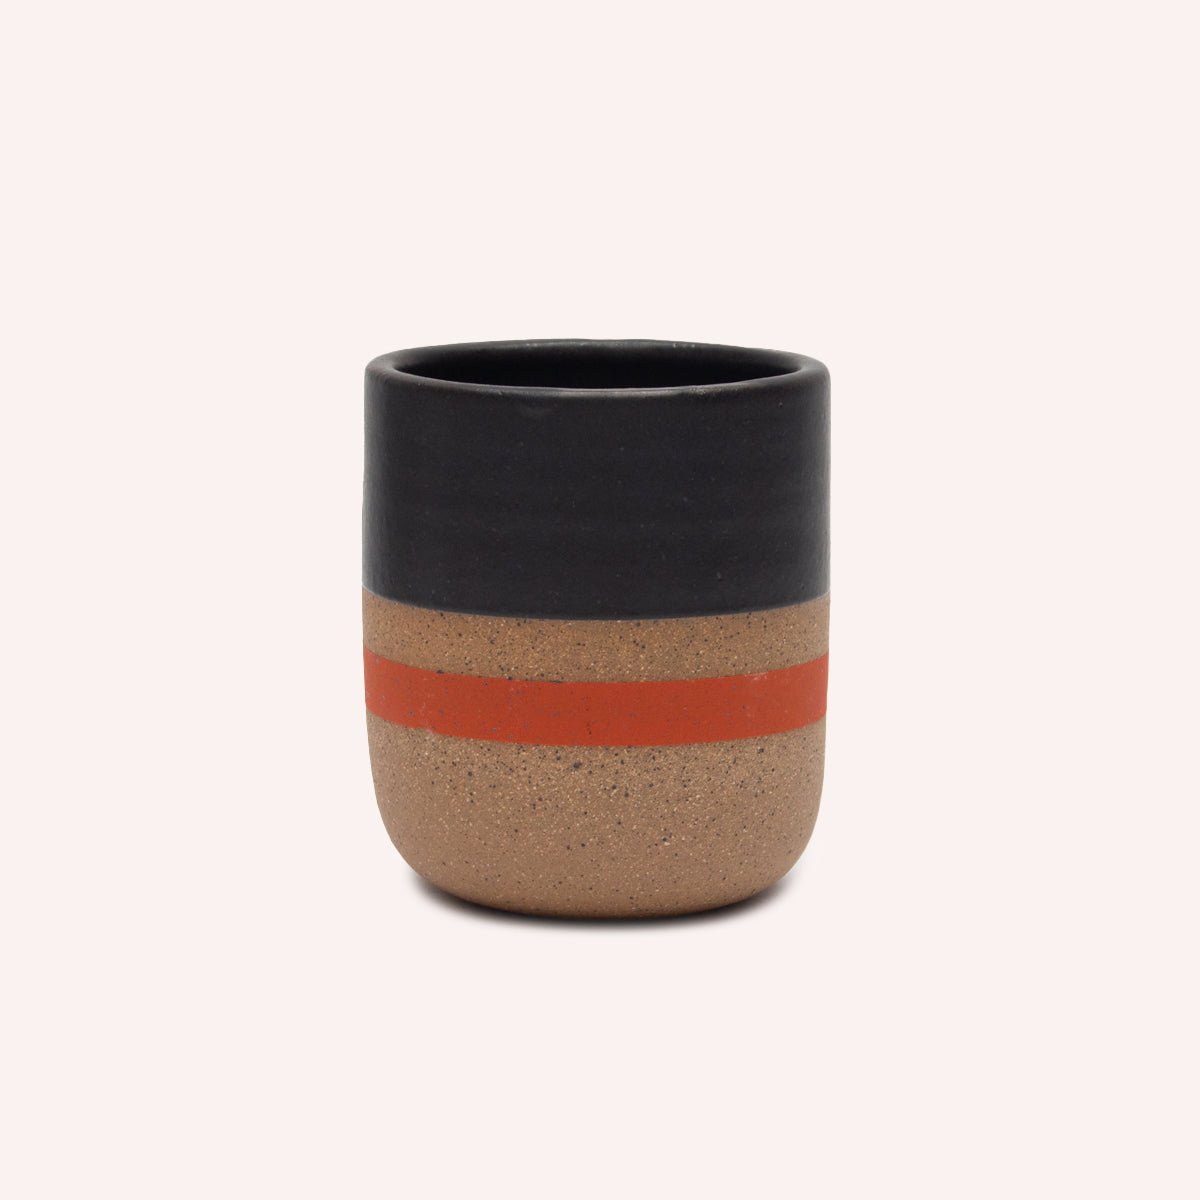 Handleless Mug with black satin glaze and reddish/orange stripe. Made in Hood River, Oregon by Wolf Ceramics.